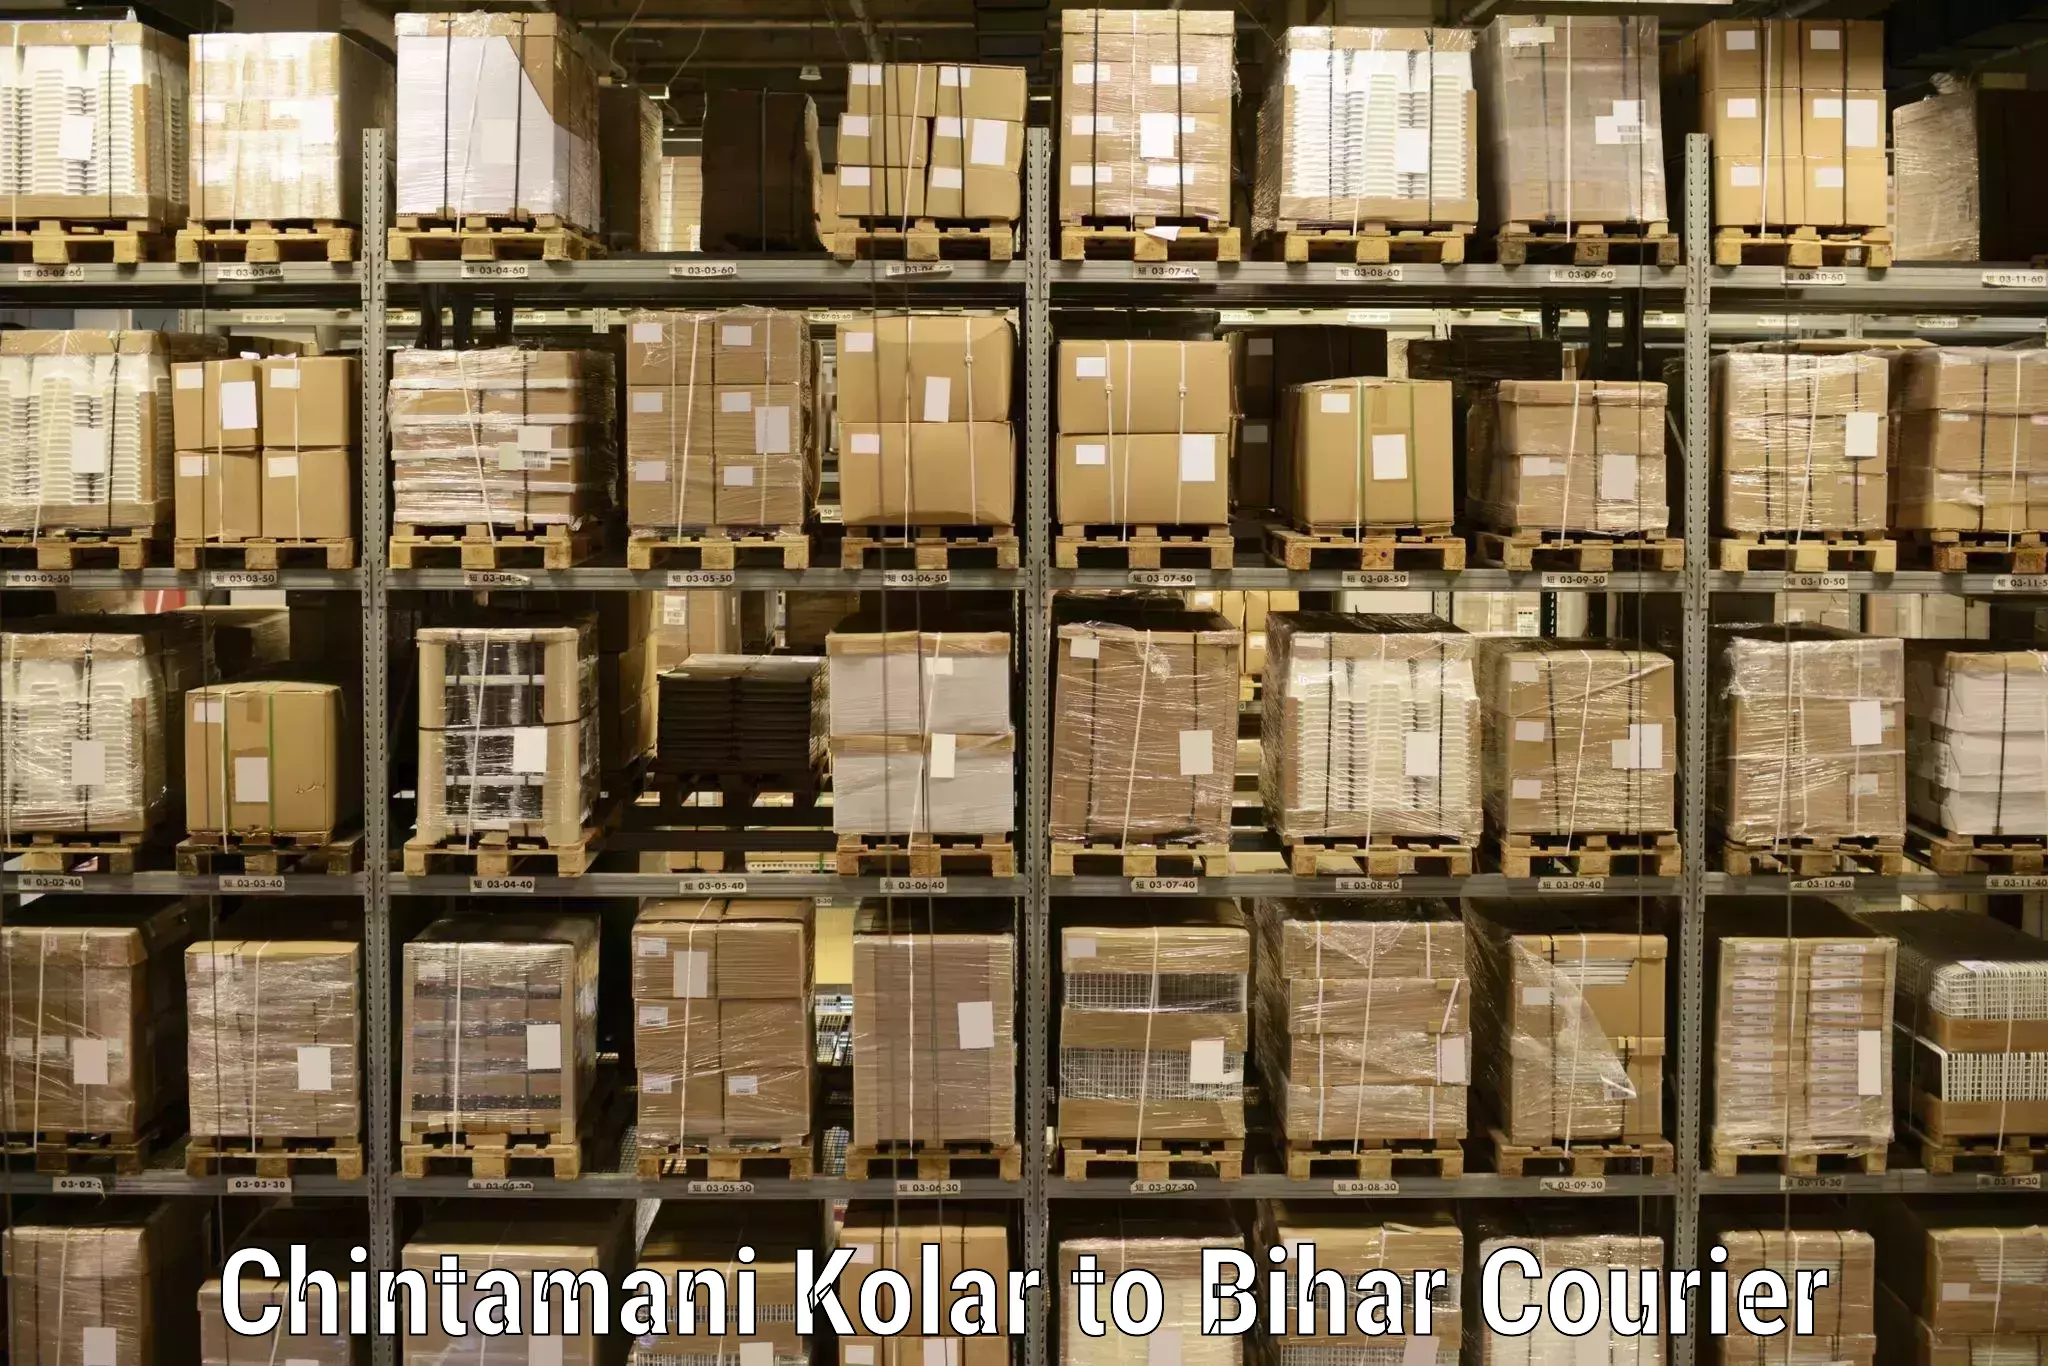 Global courier networks Chintamani Kolar to Bettiah